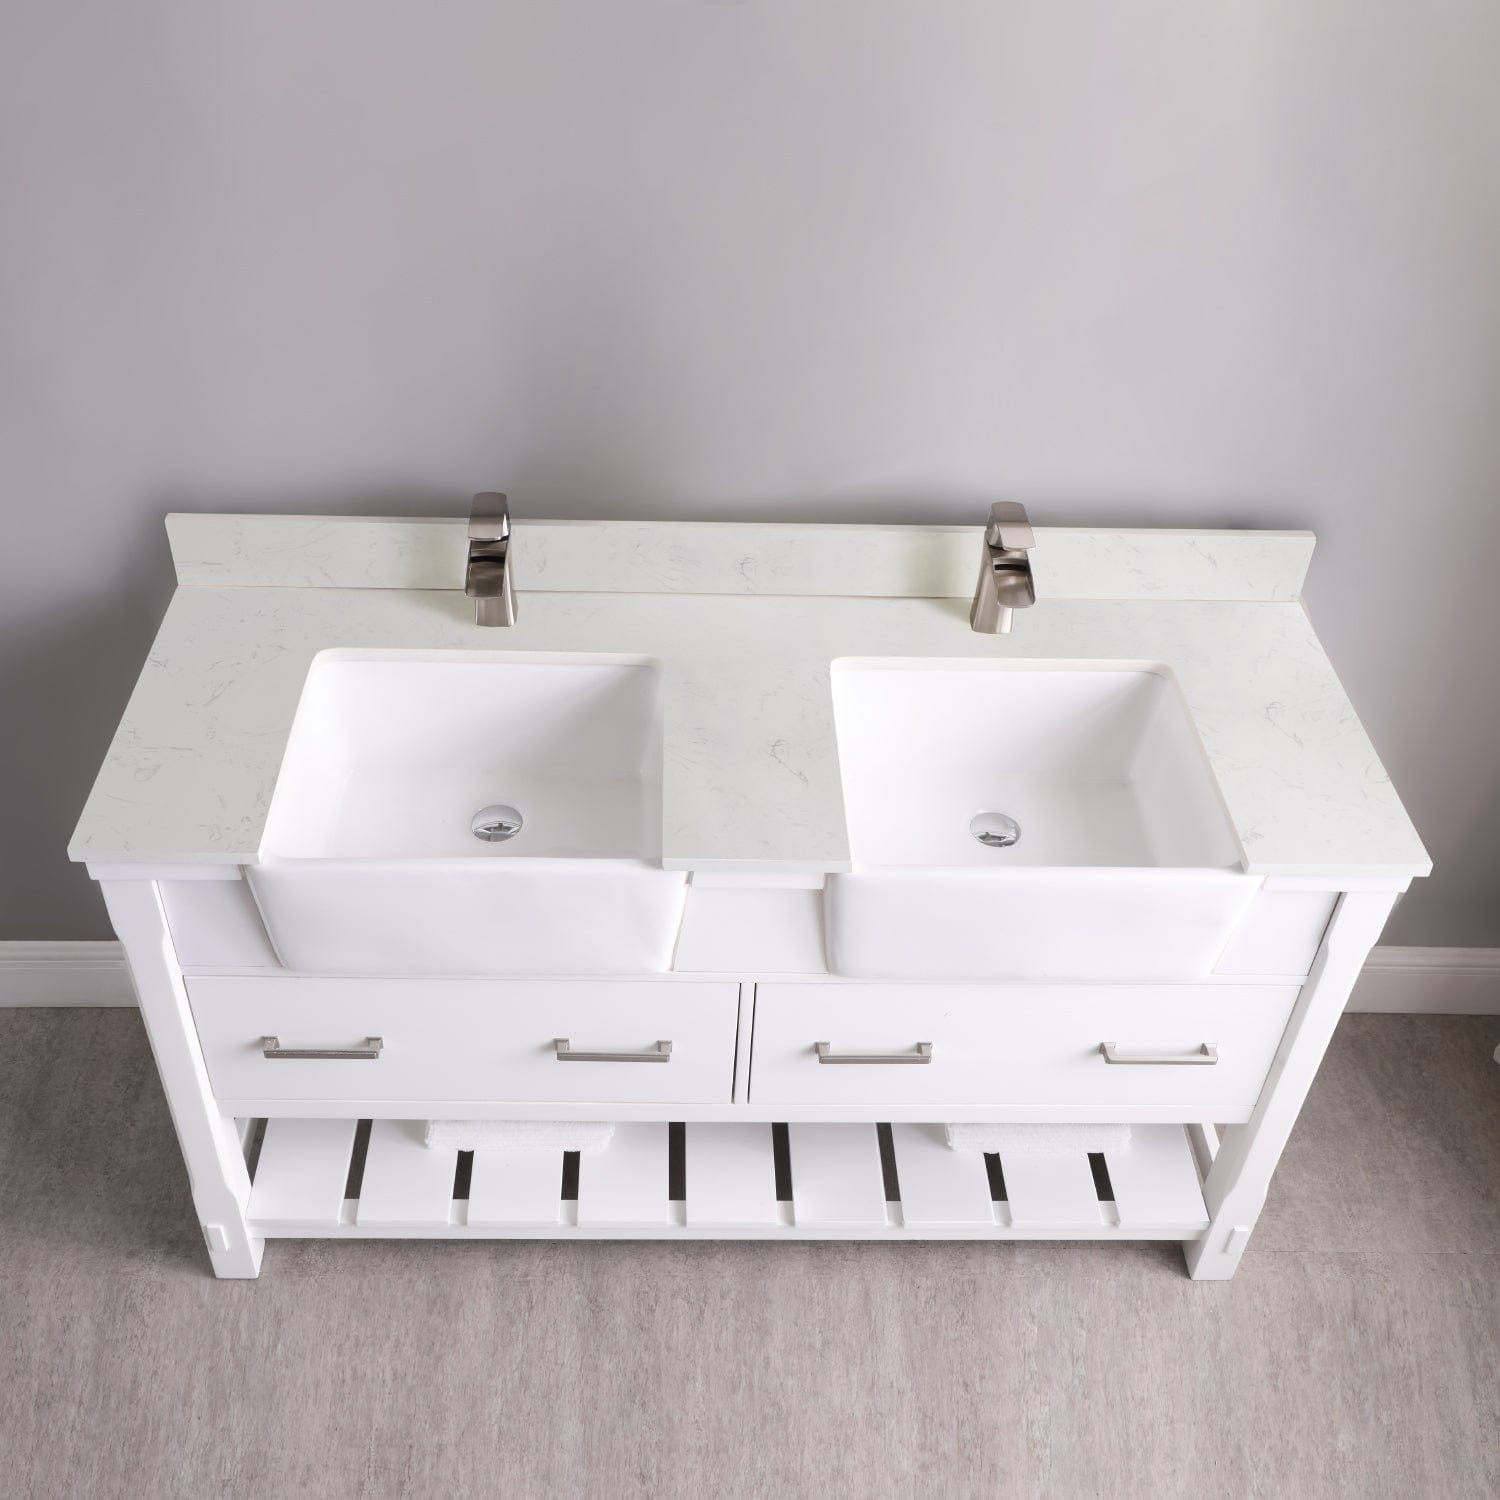 Altair Georgia 60" Double Bathroom Vanity Set in White and Composite Carrara White Stone Top with White Farmhouse Basin without Mirror 537060-WH-AW-NM - Molaix631112970662Vanity537060-WH-AW-NM